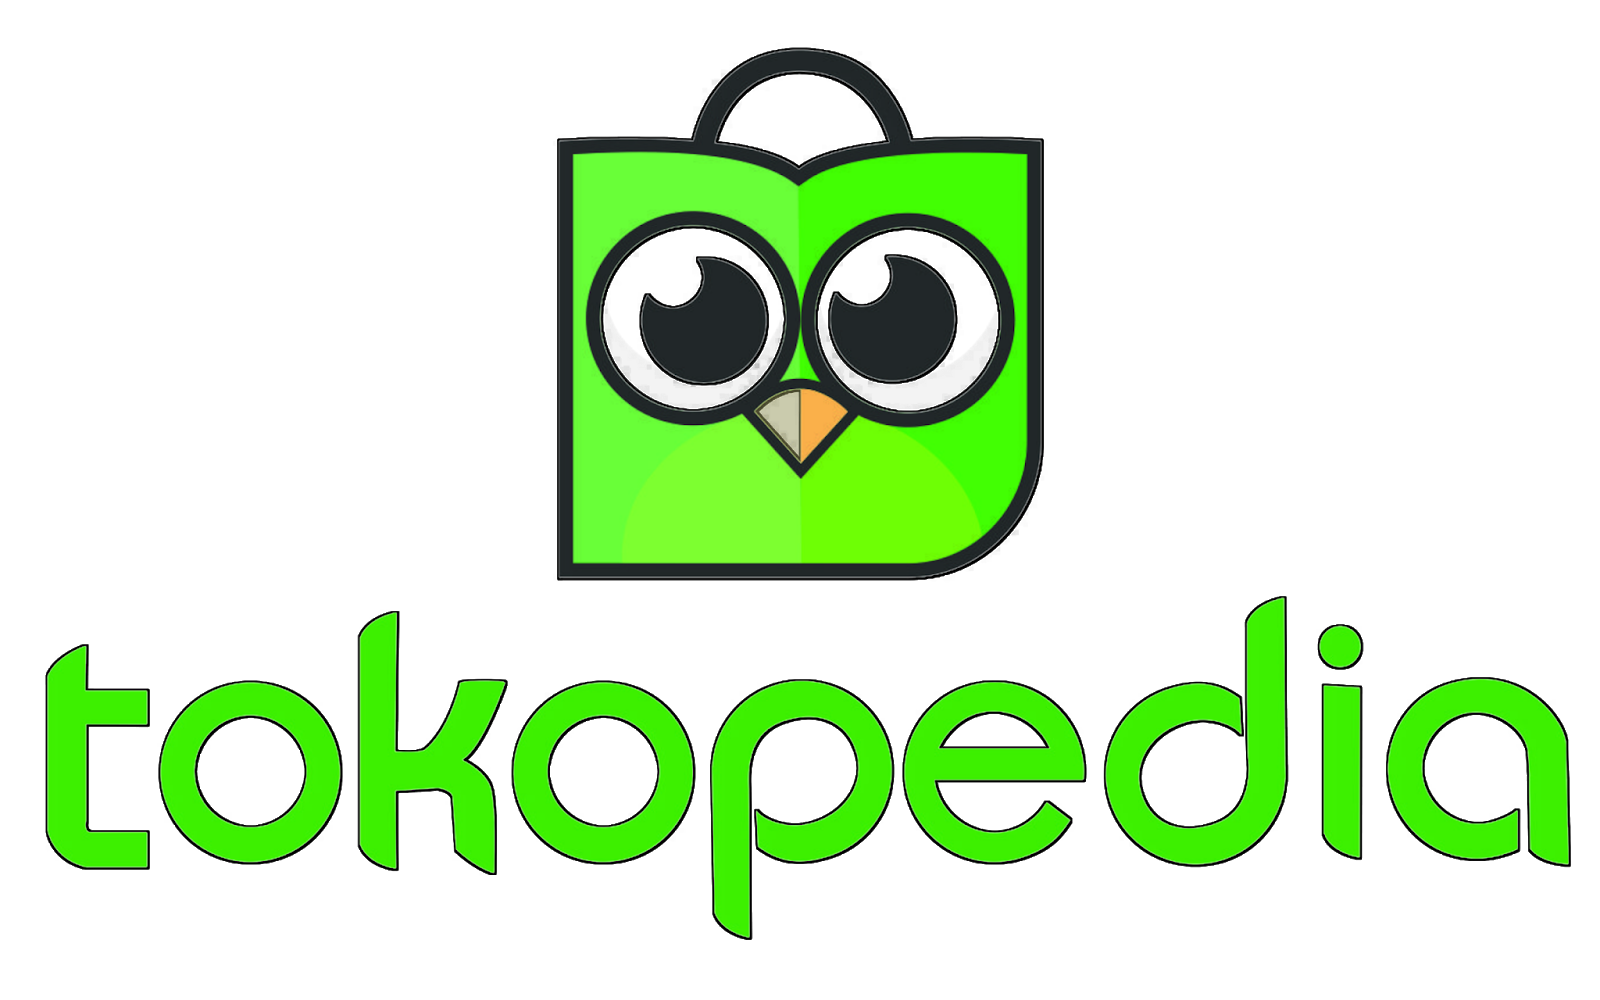 tokopedia logo clipart 10 free Cliparts | Download images 